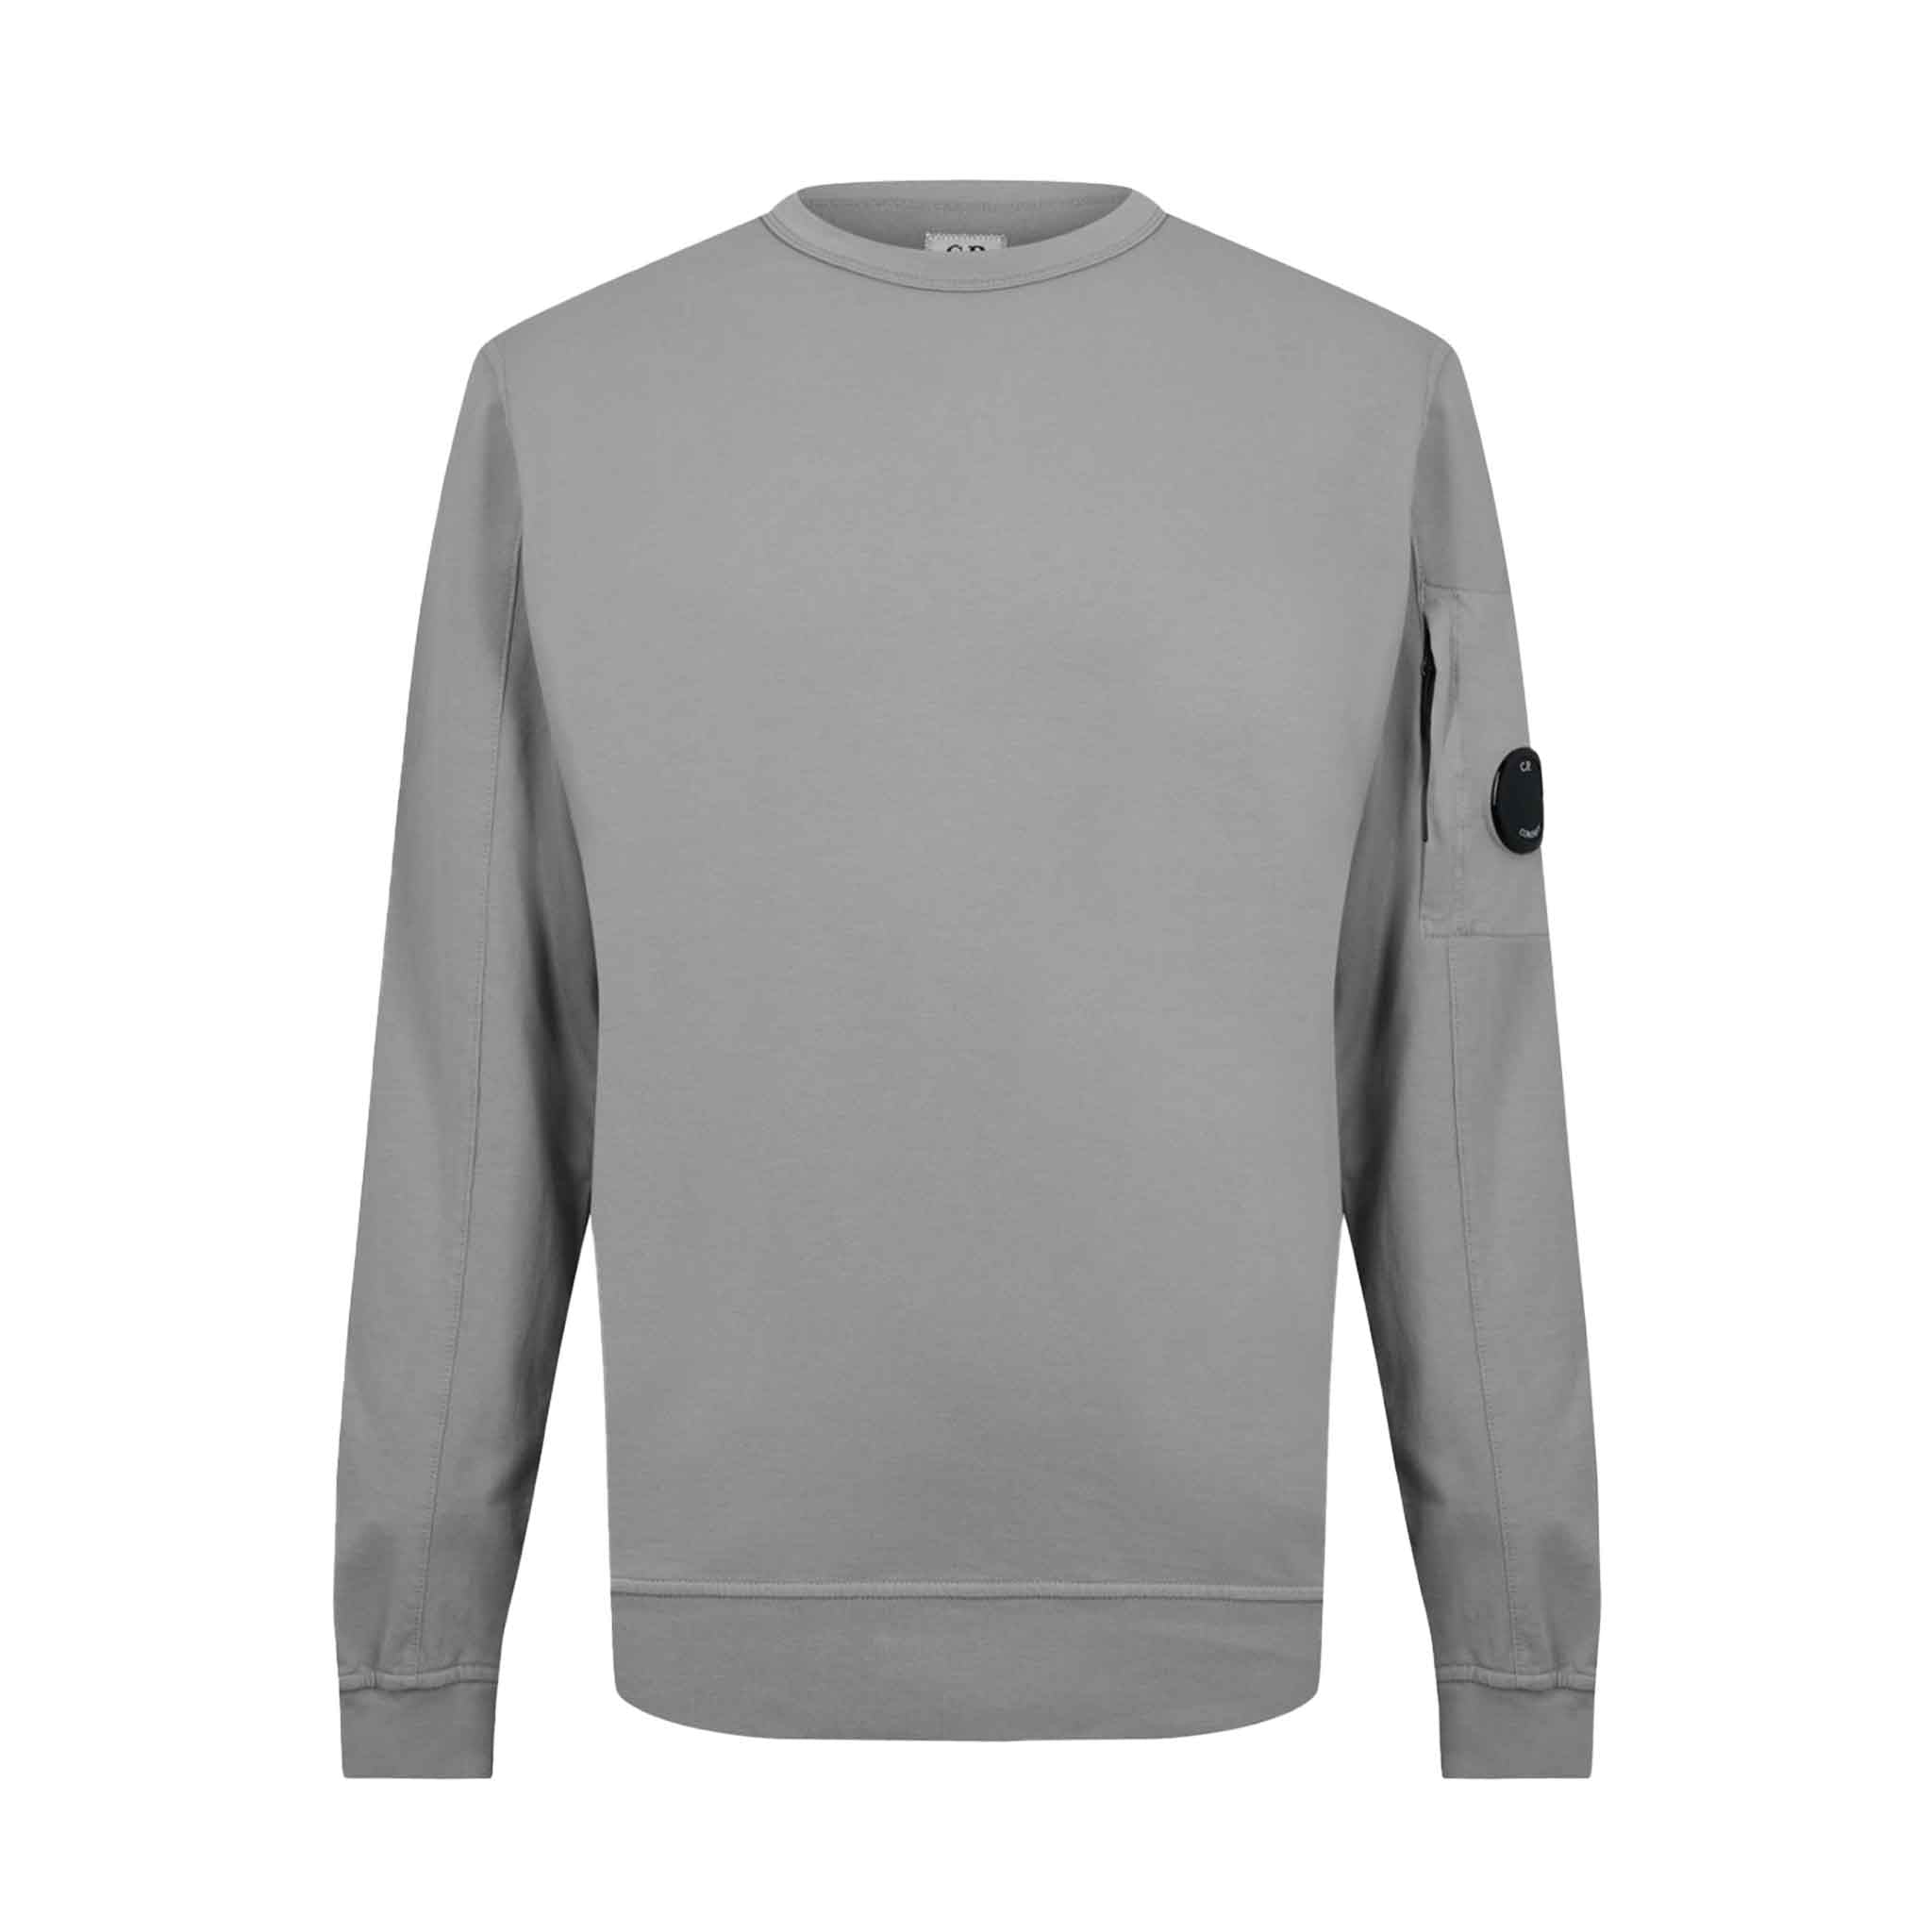 C.P. Company Light Fleece Sweatshirt in Drizzle Grey